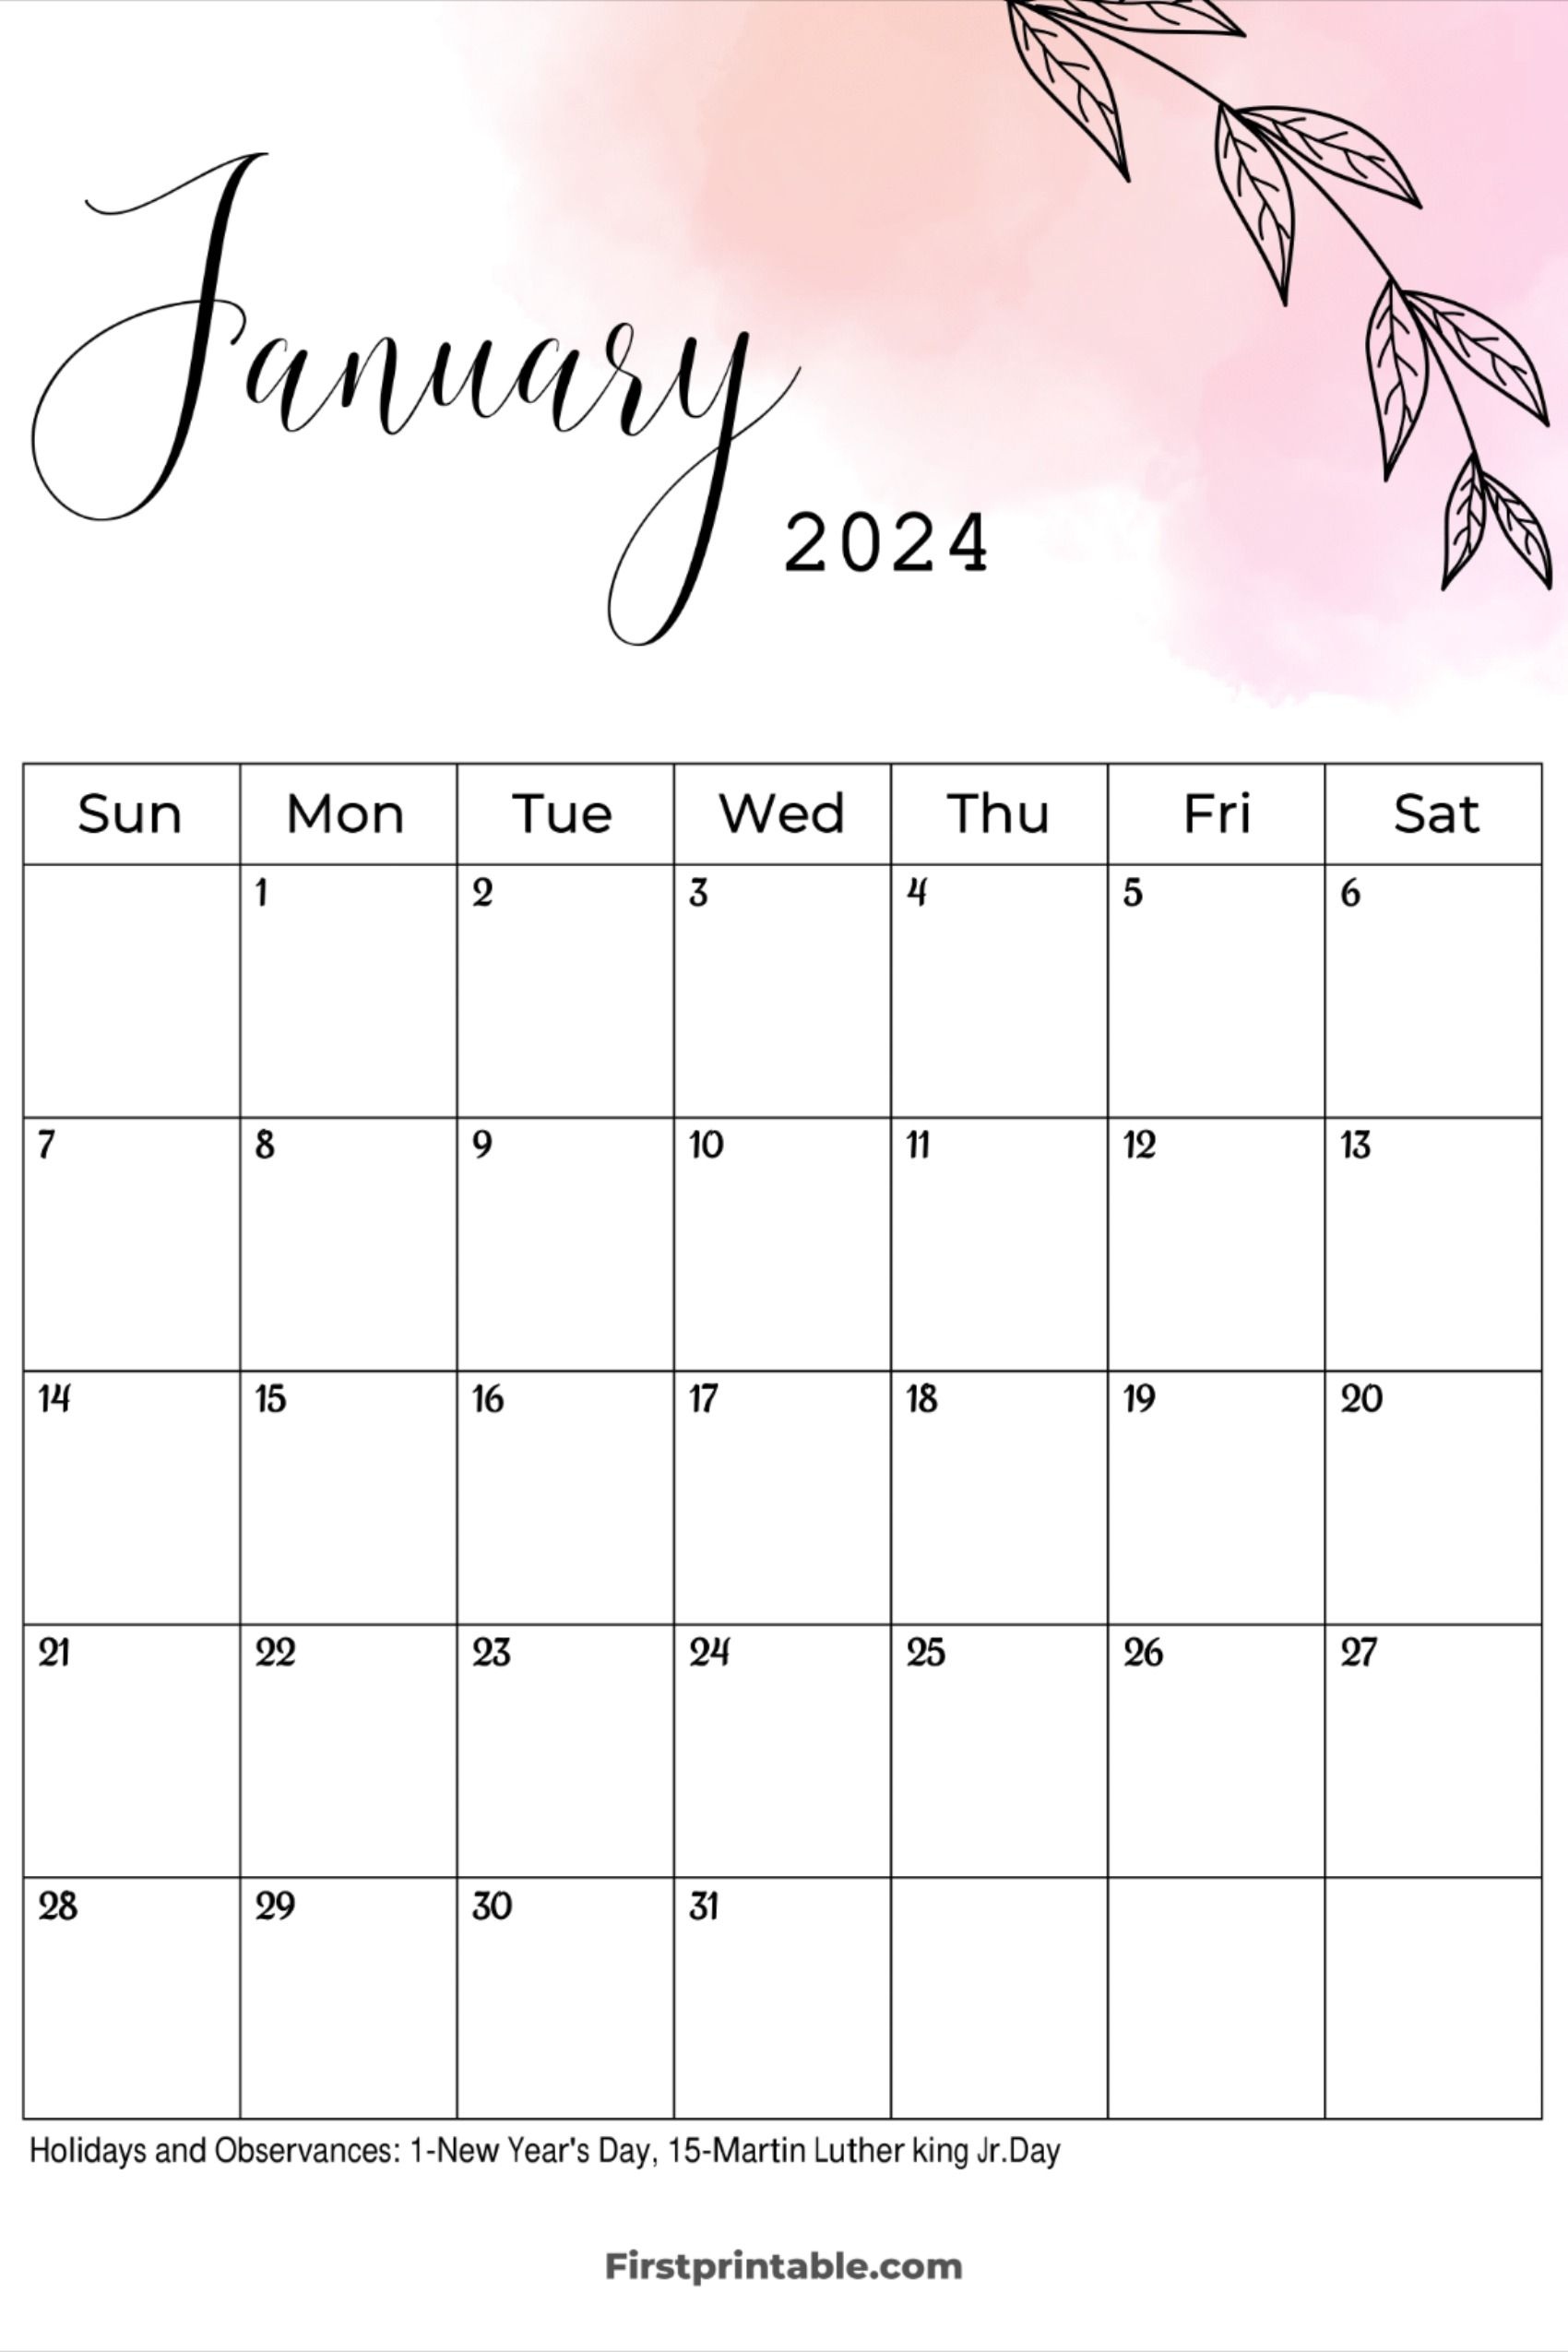 January 2024 Calendar With Holidays | Free Printable | Floral within Free Printable Blank Calendar January 2024 Calendar Template